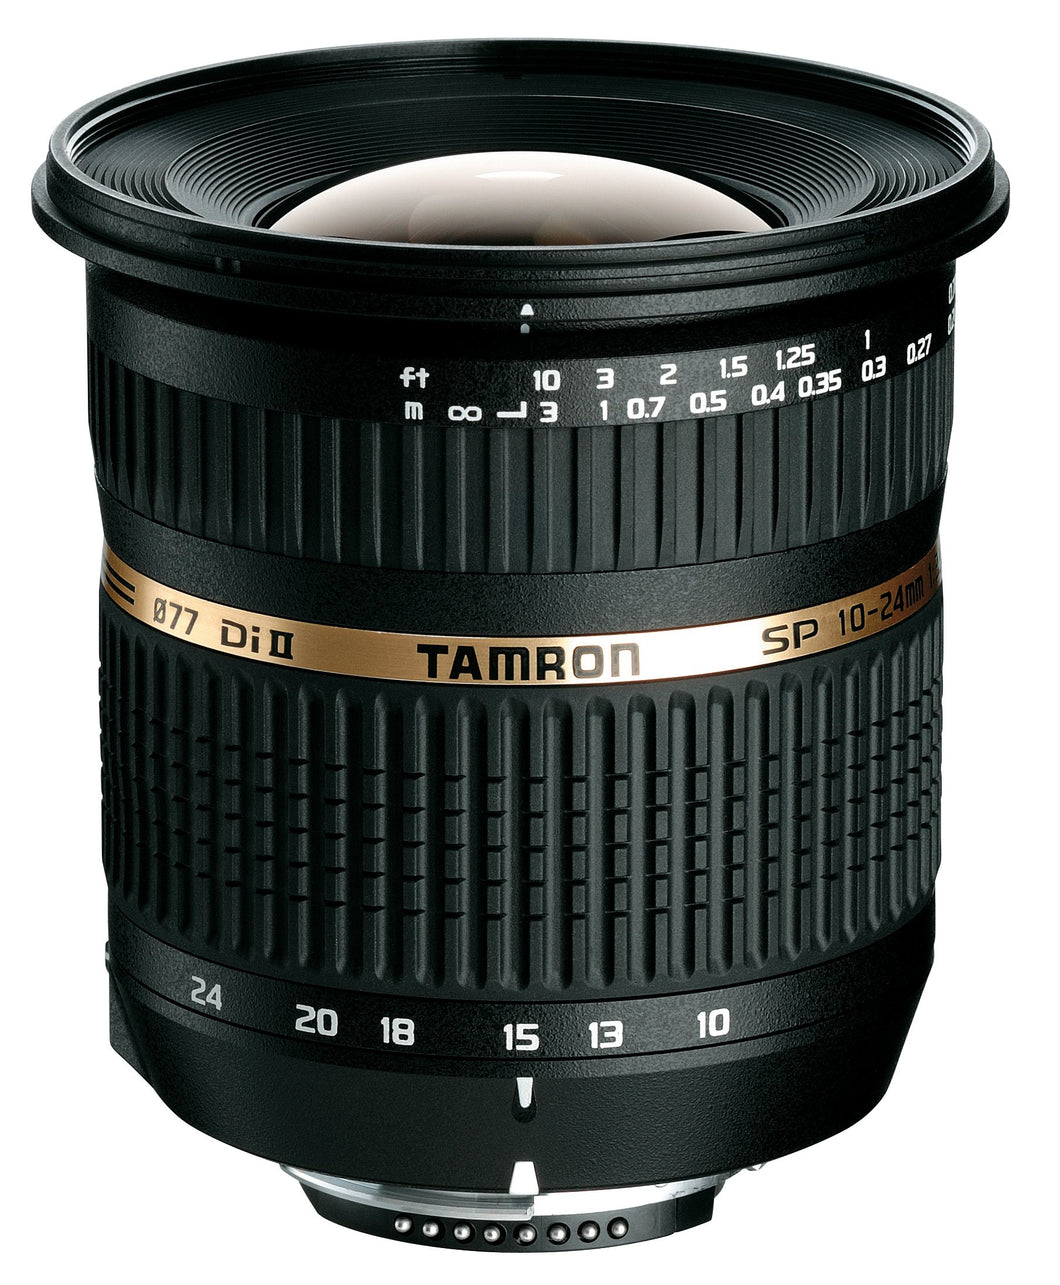 Used: TAMRON SP AF 10-24MM F/3.5-4.5 DI II LD for Nikon